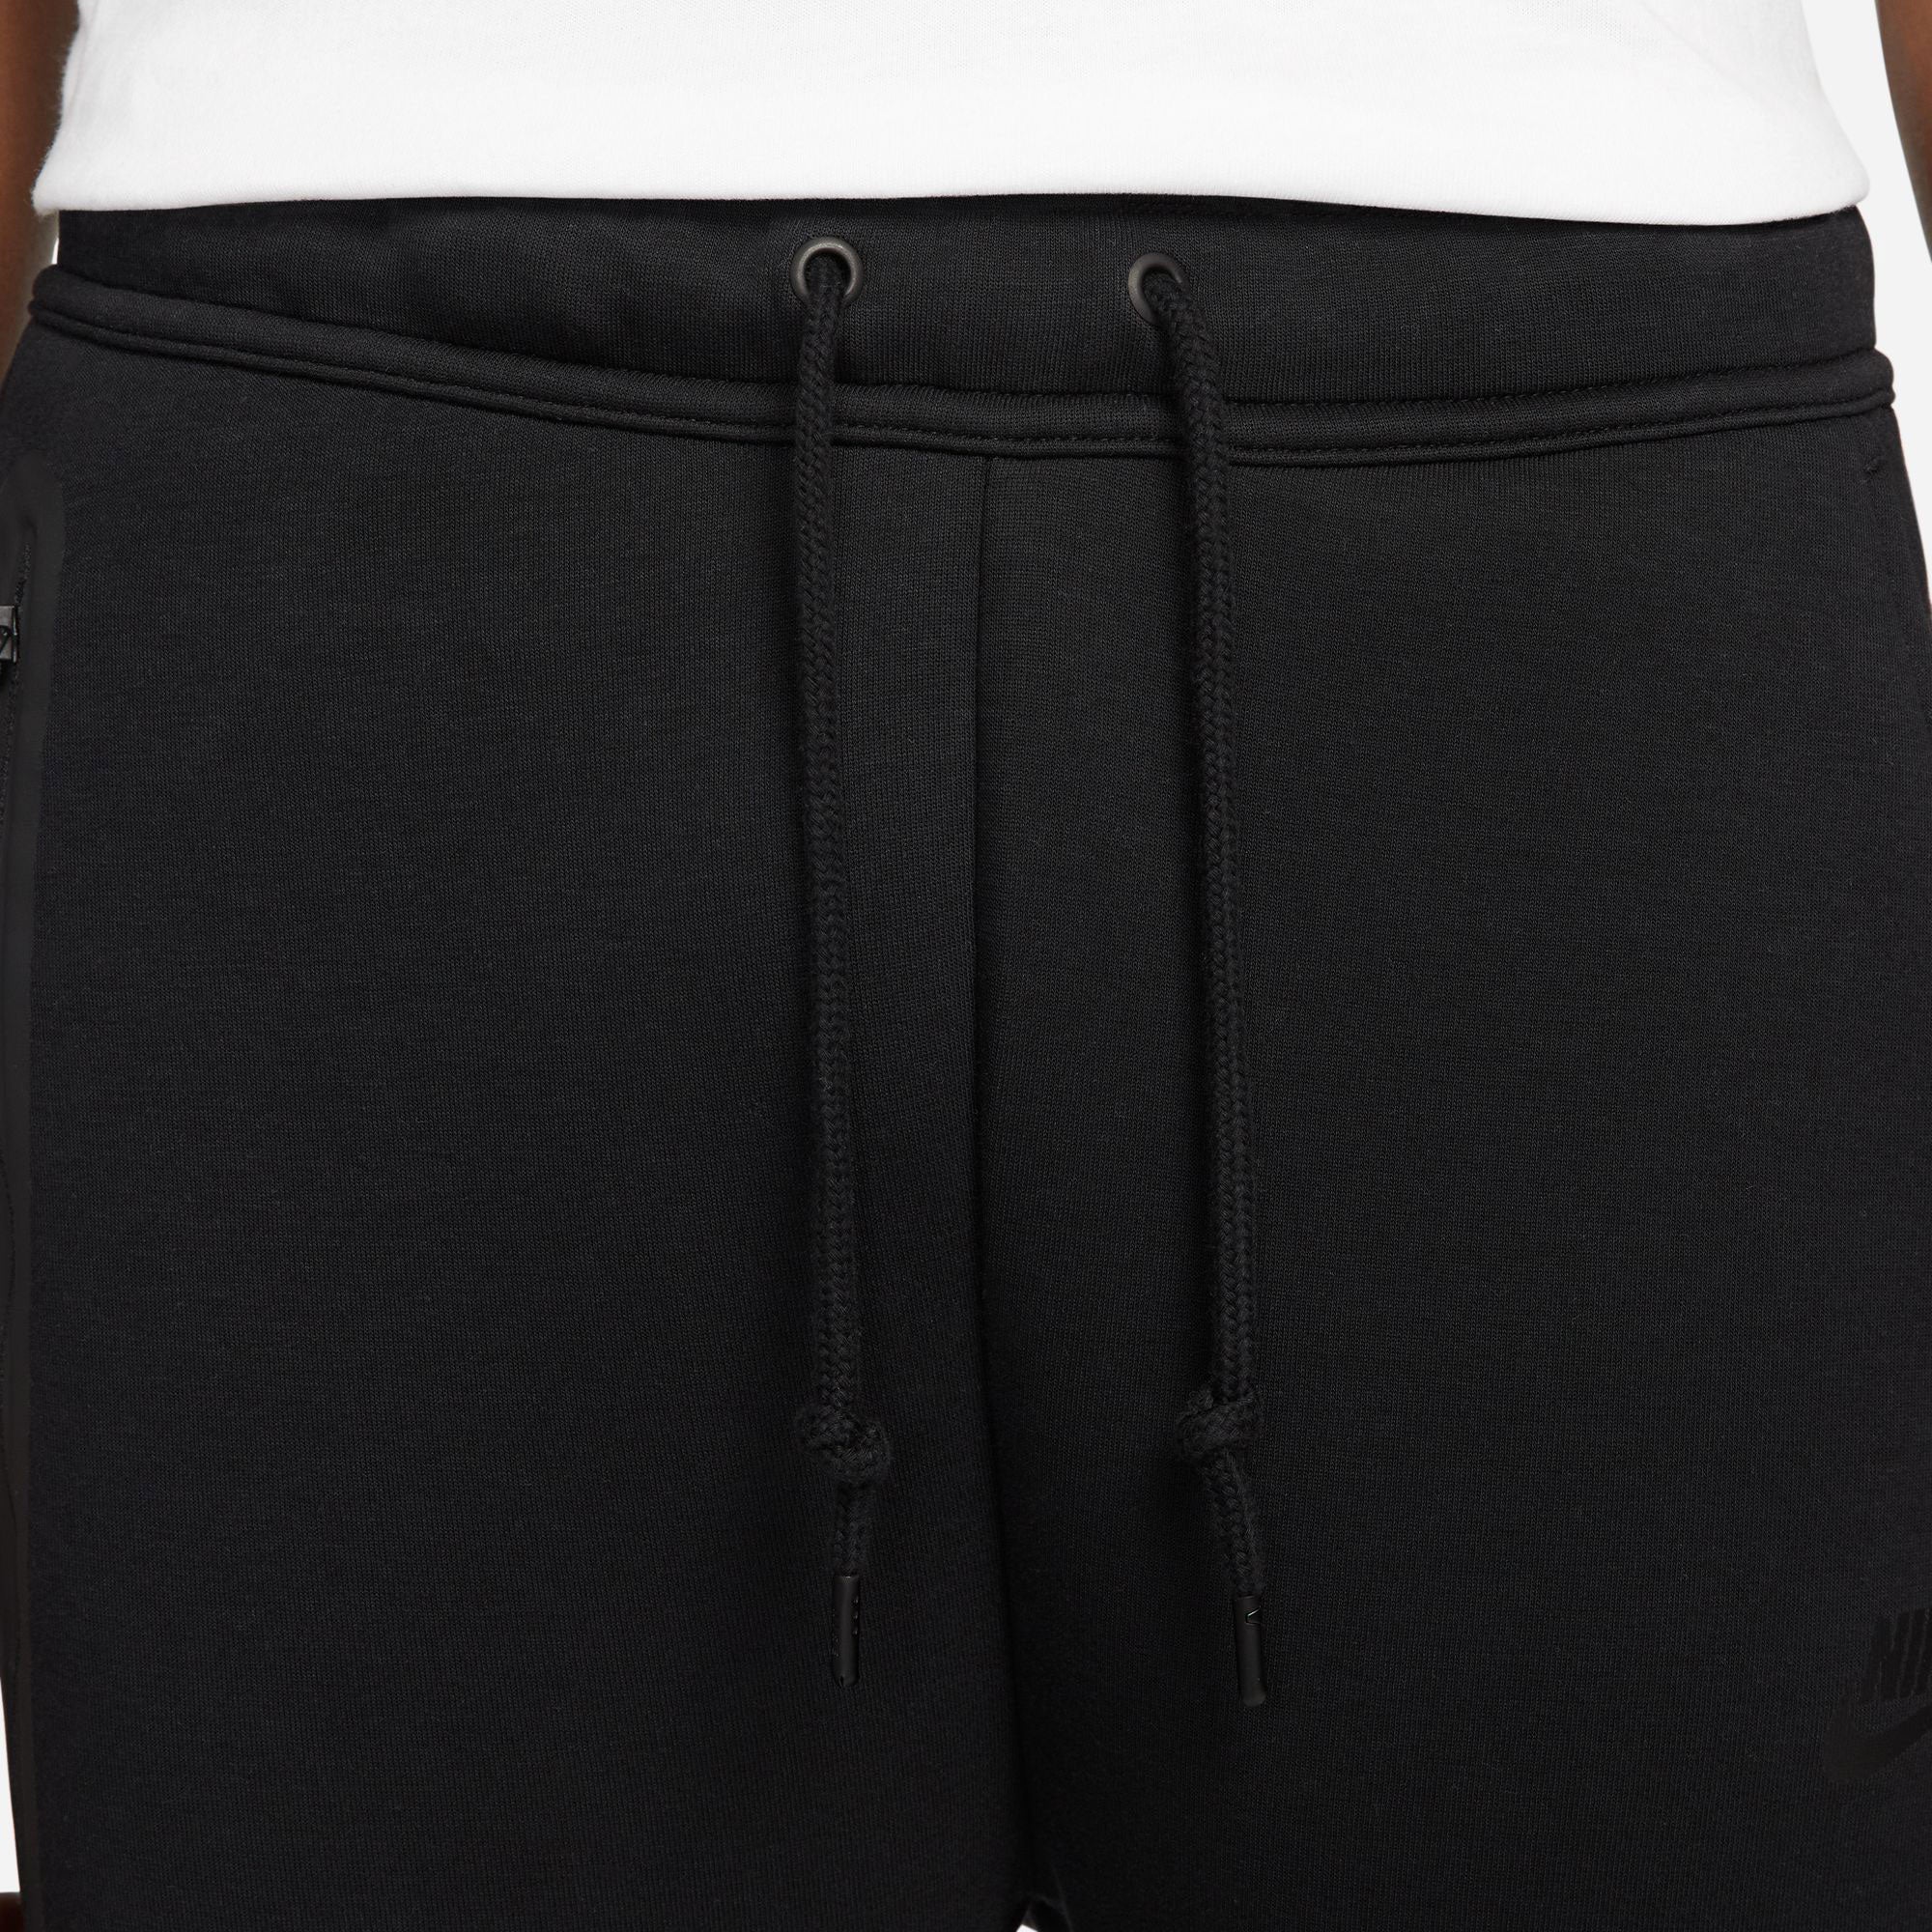 Nike Tech Fleece Men's Pants - Black (4)